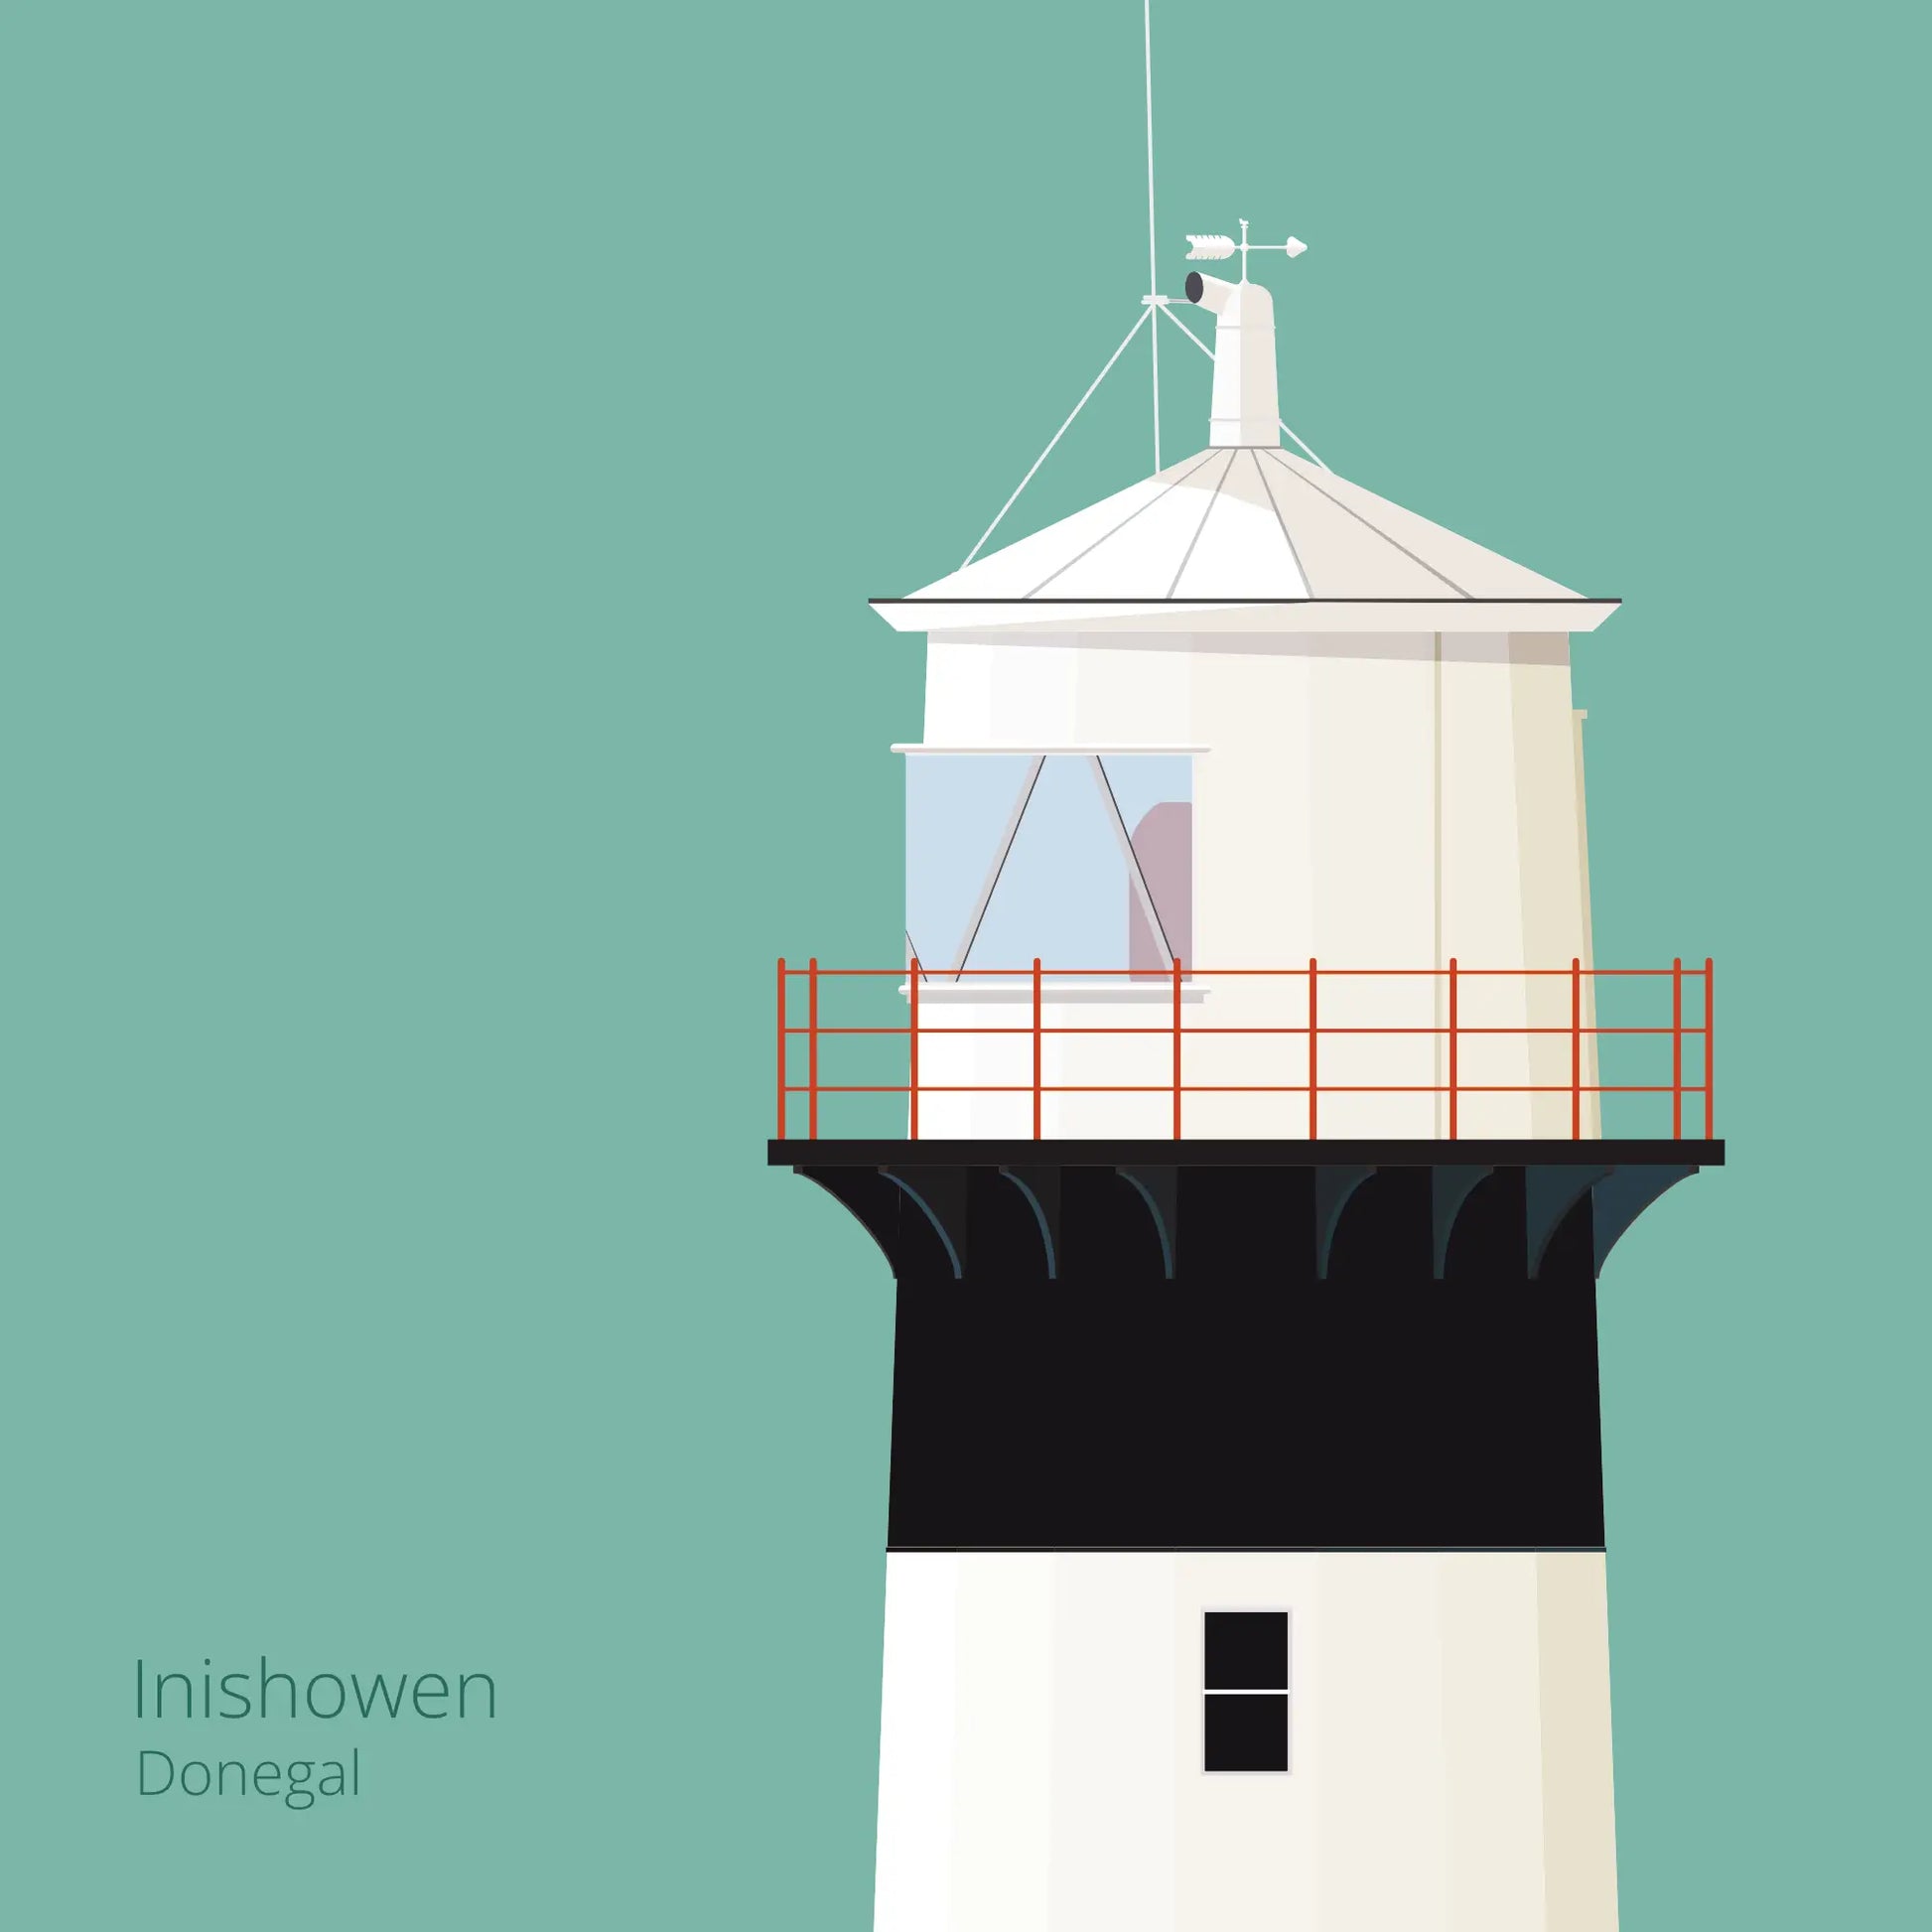 Illustration of inishowen lighthouse on an ocean green background